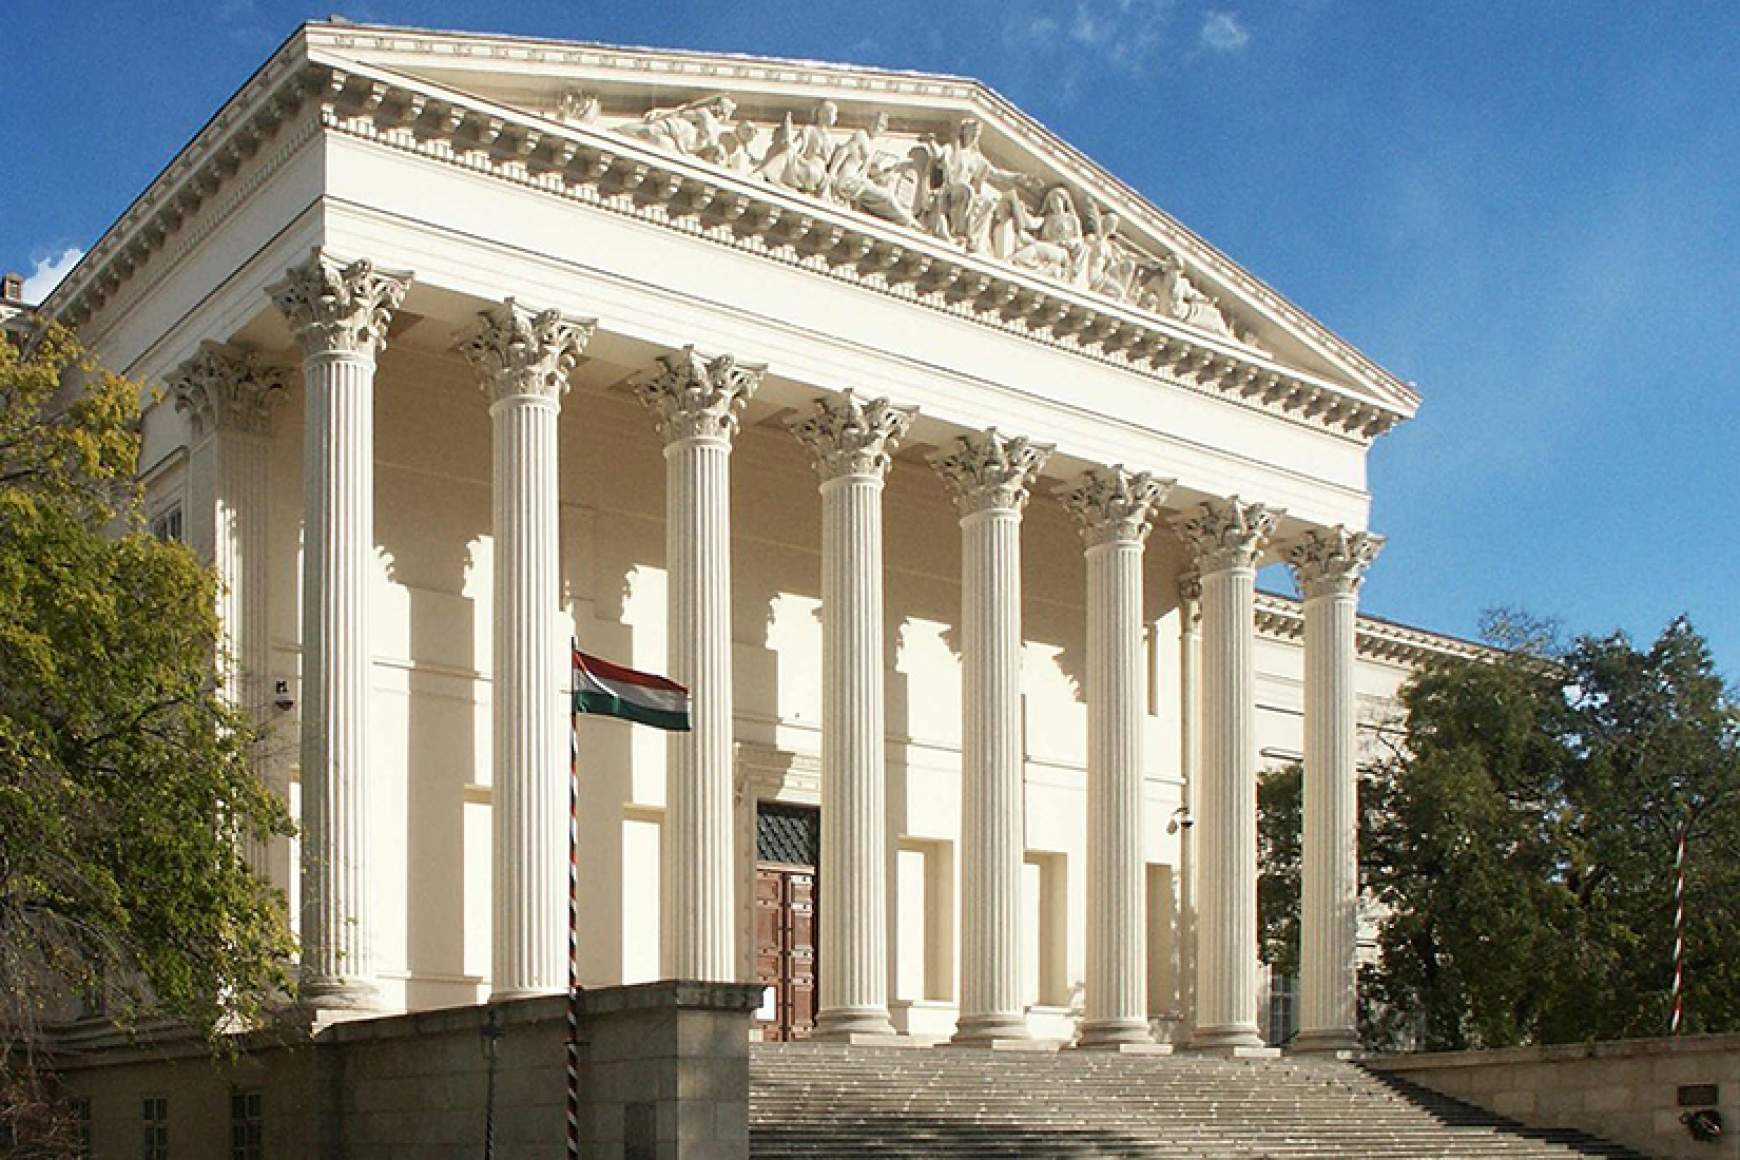 A Magyar Nemzeti Múzeum